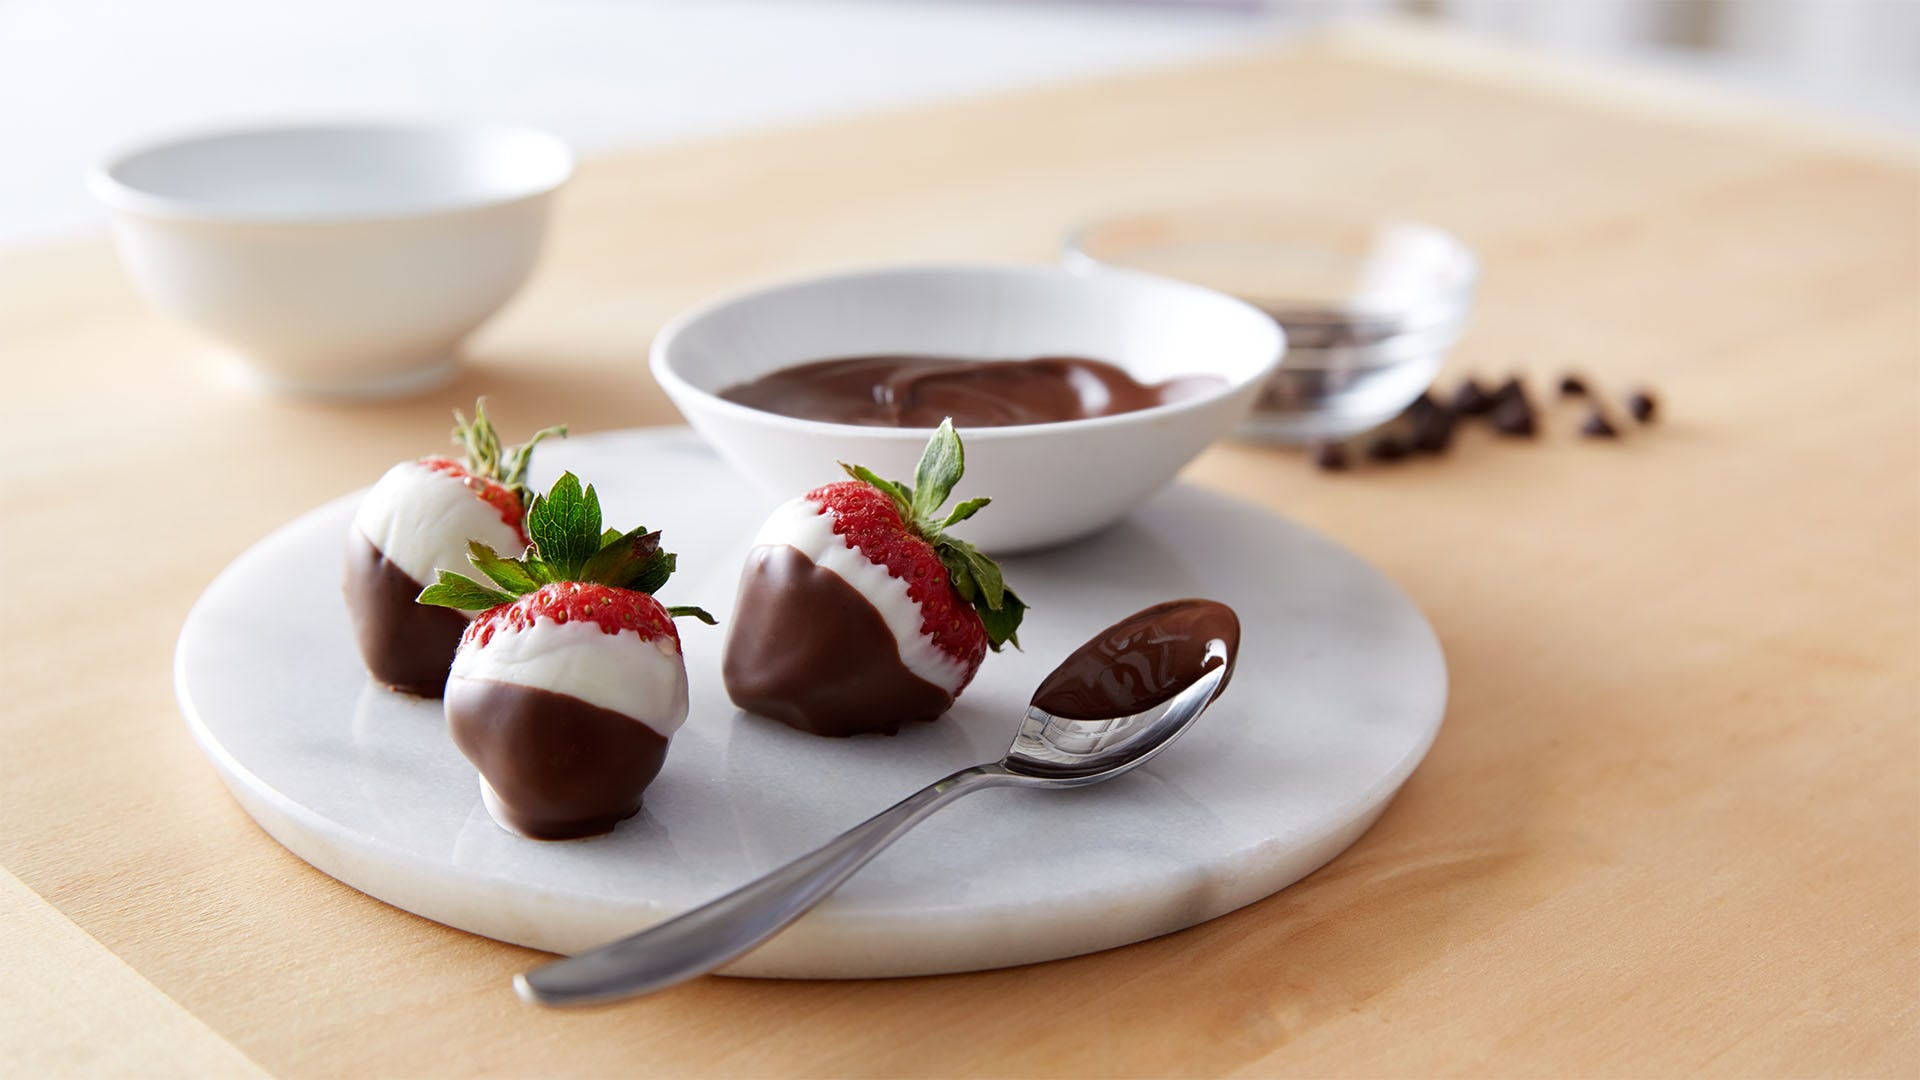 white creme and chocolate covered strawberries